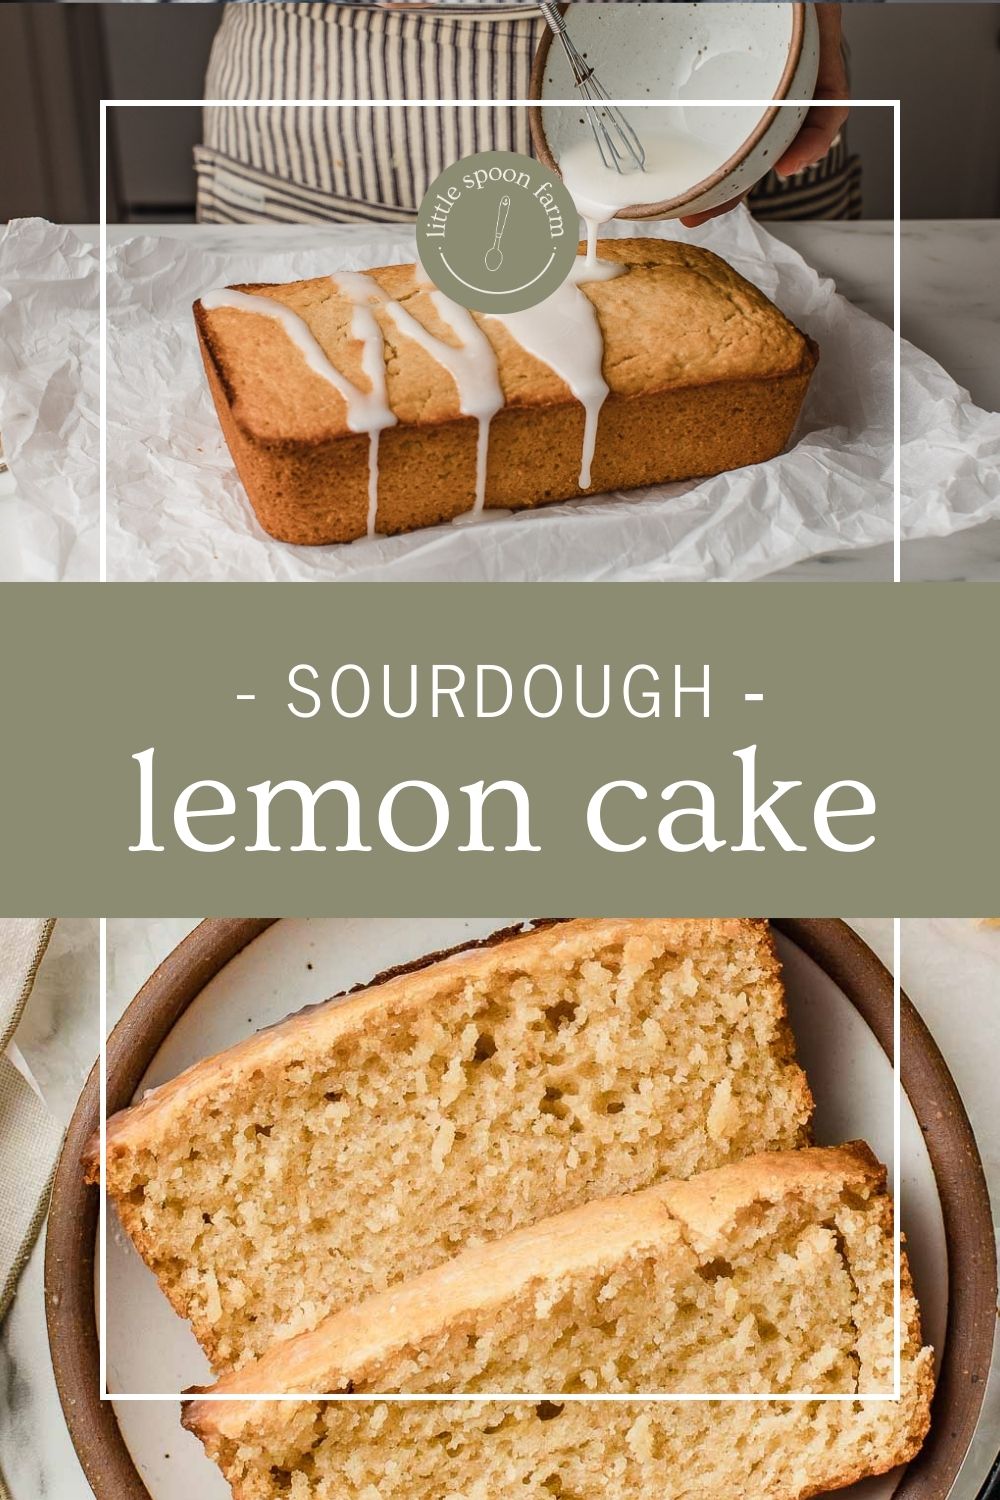 Sourdough lemon cake